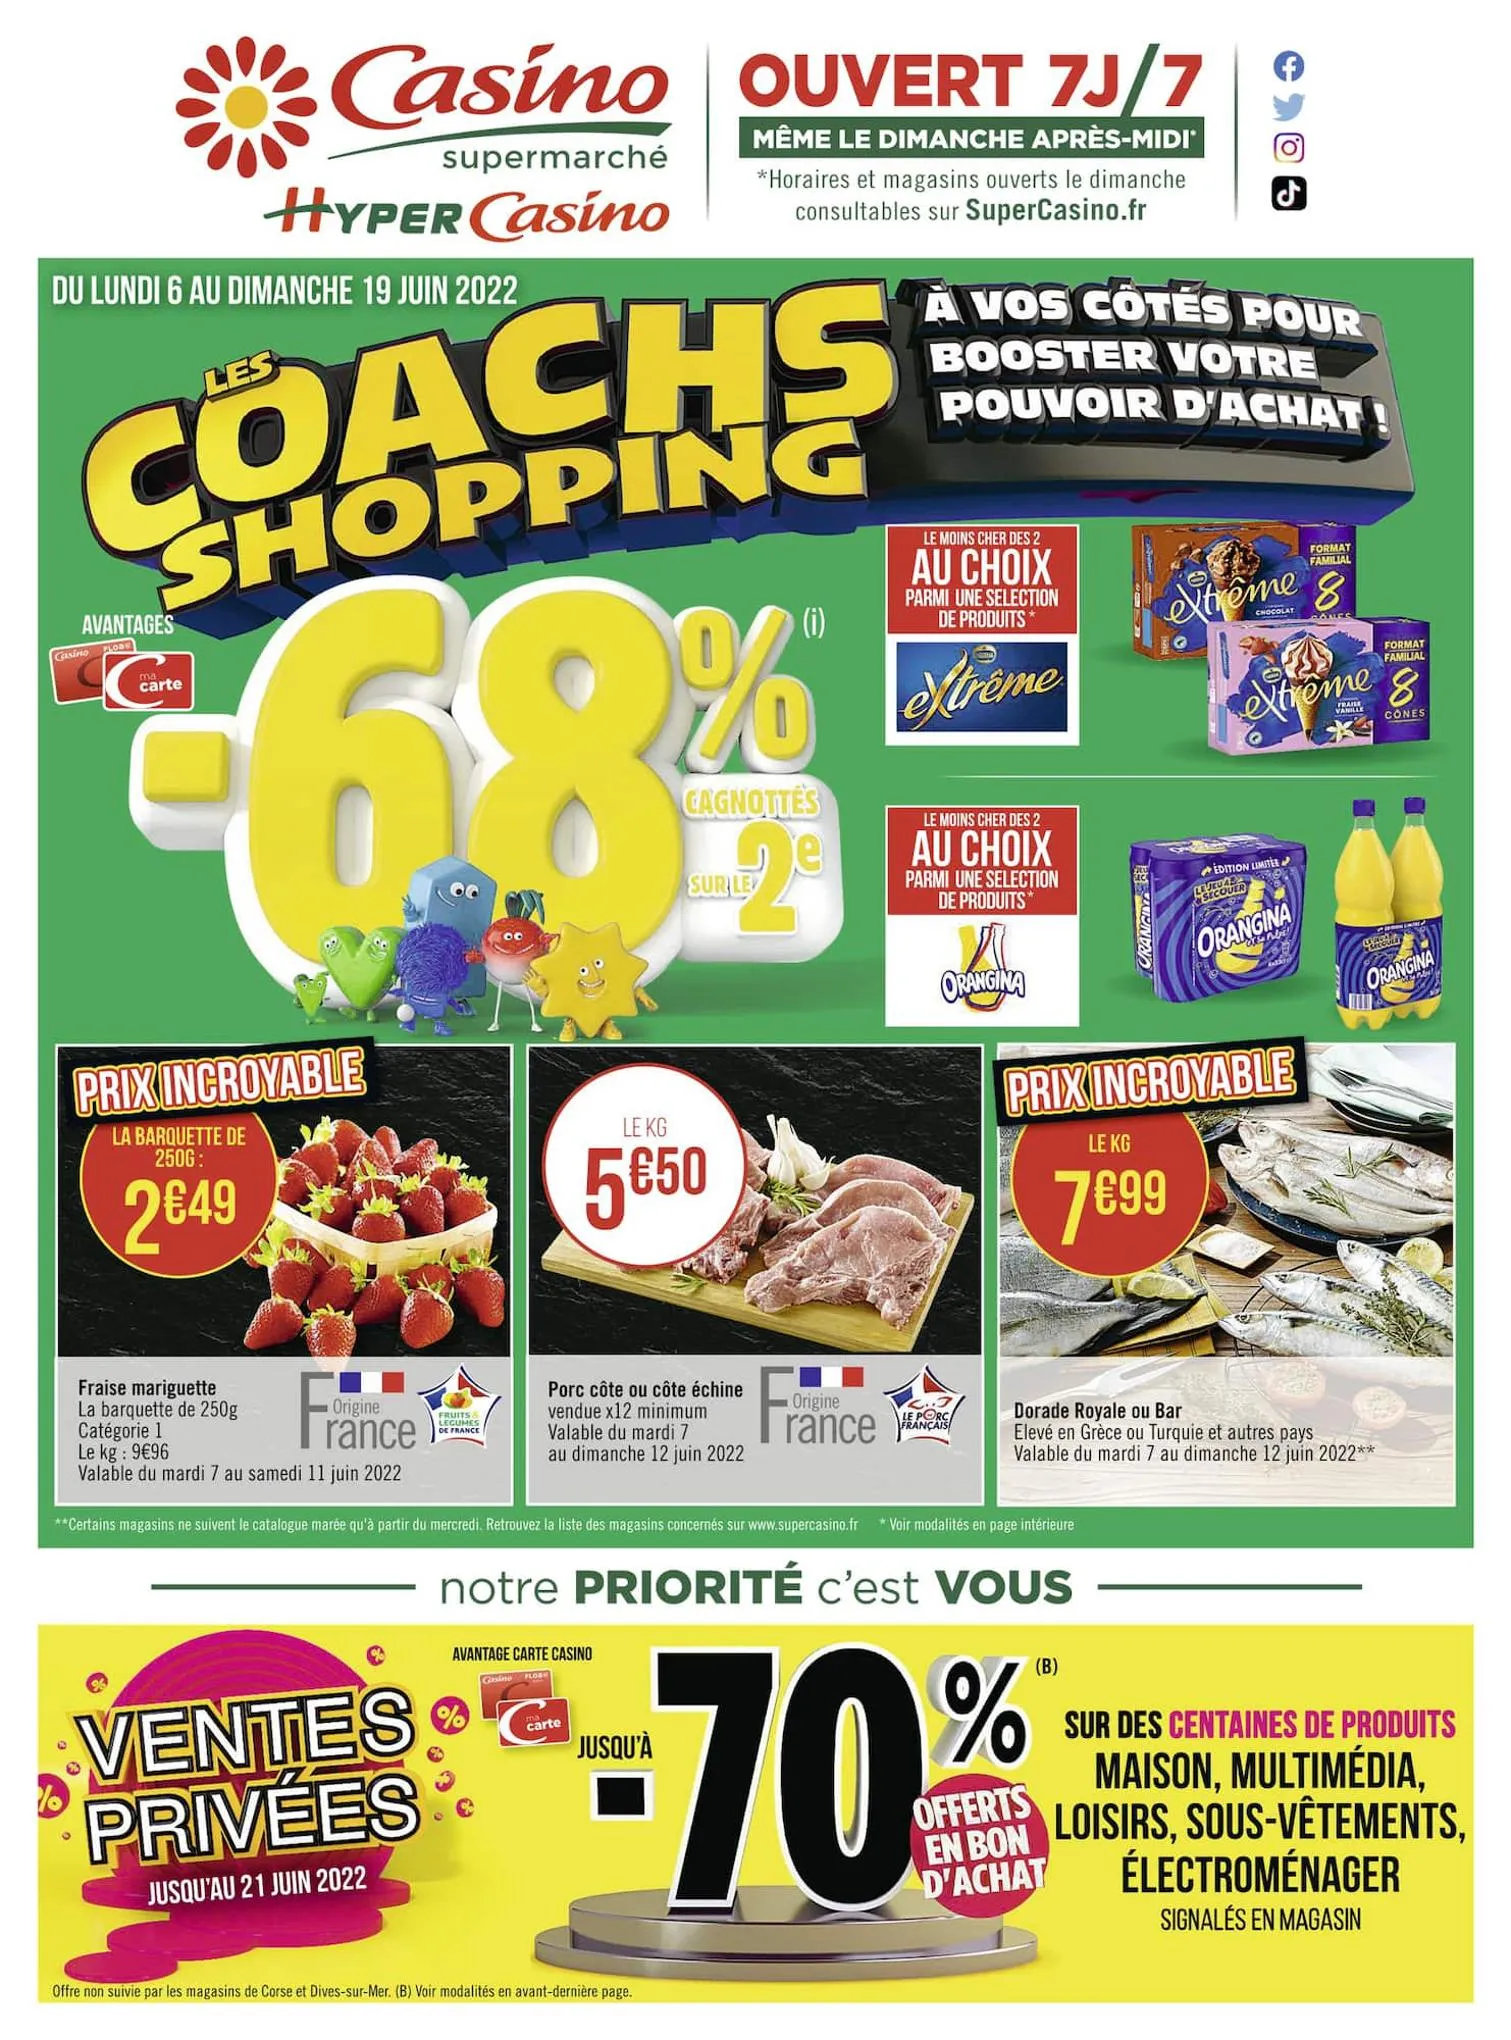 Catalogue Les coachs shopping, page 00036